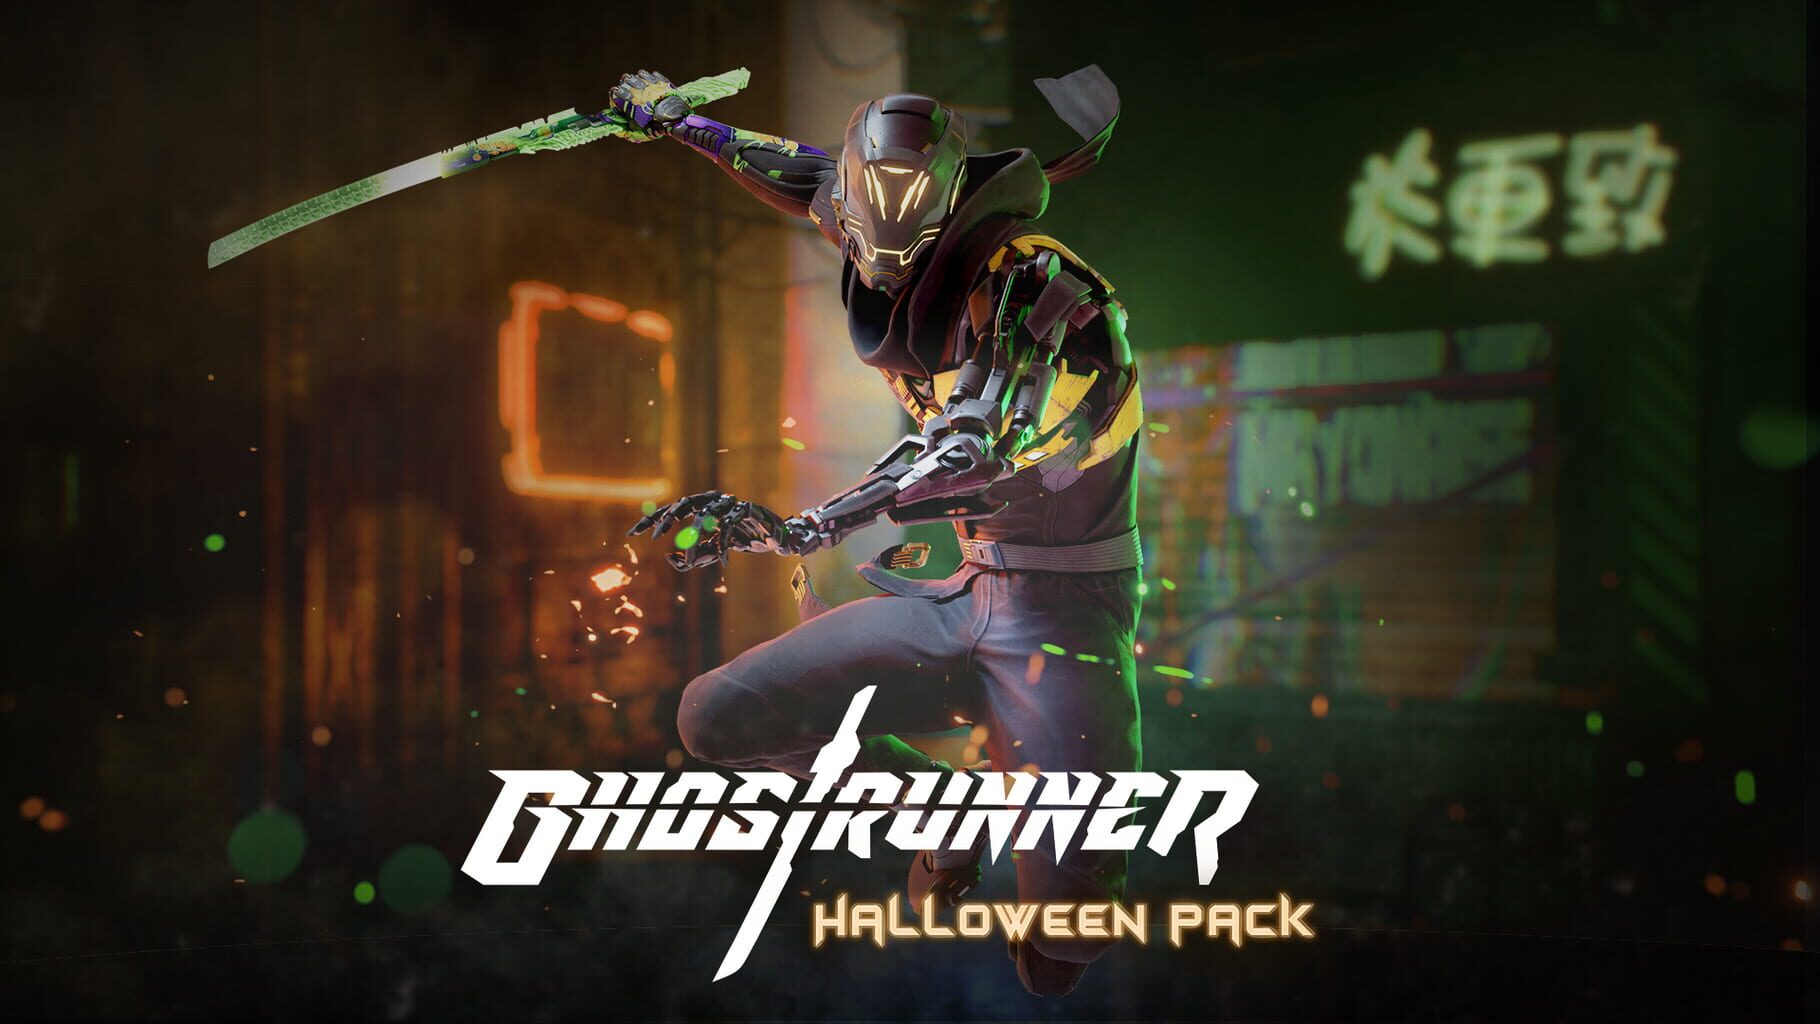 Ghostrunner: Halloween Pack artwork